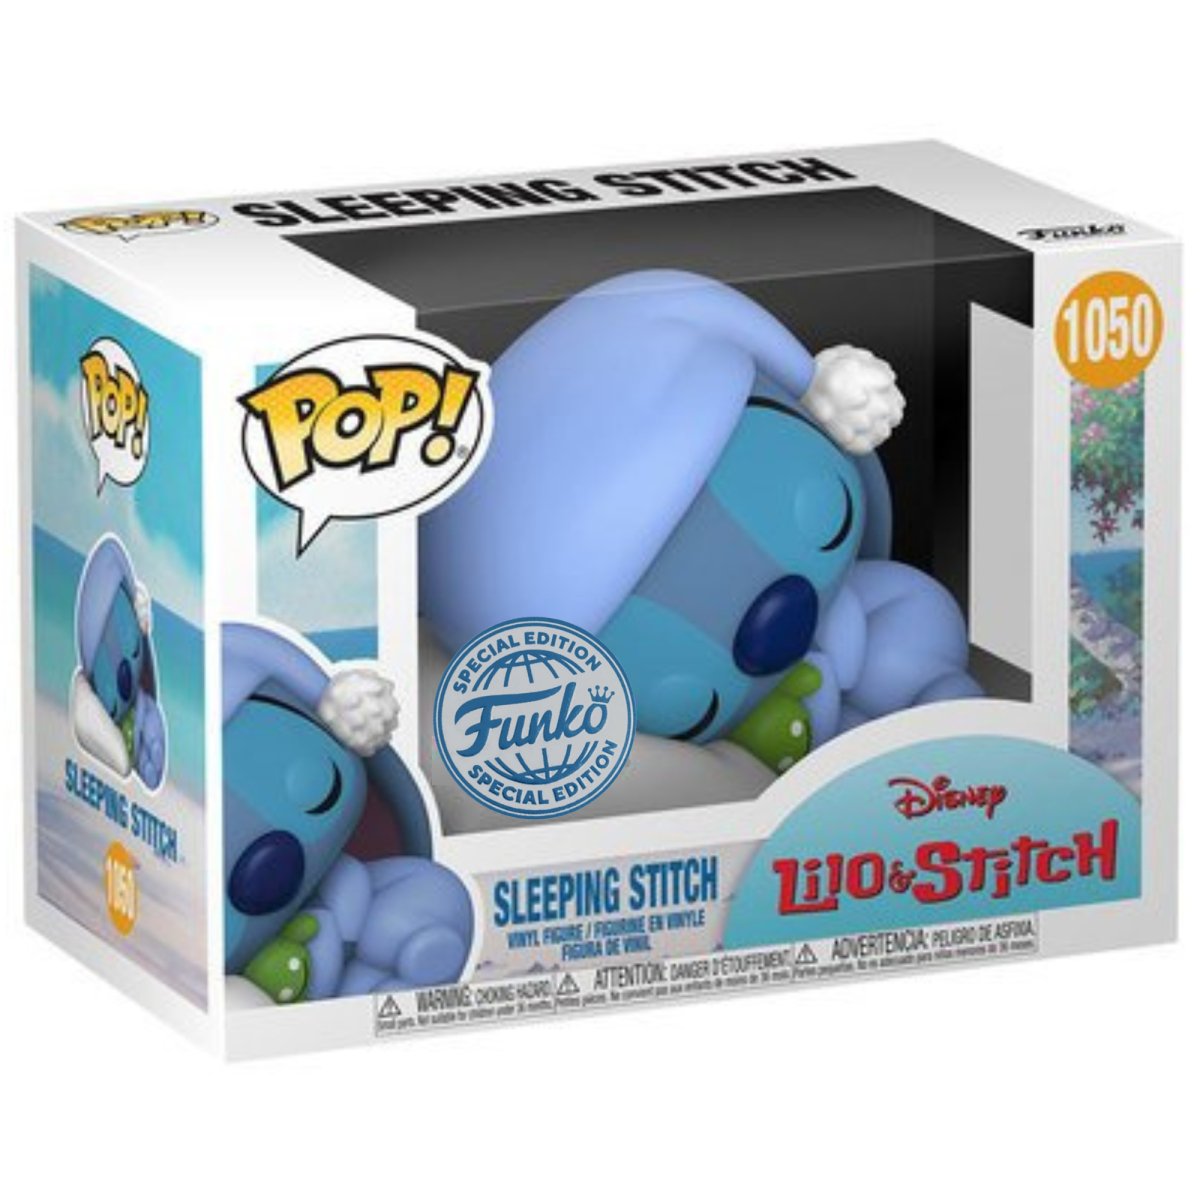 Lilo & Stitch - Sleeping Stitch (Special Edition) #1050 - Funko Pop! Vinyl Disney - Persona Toys